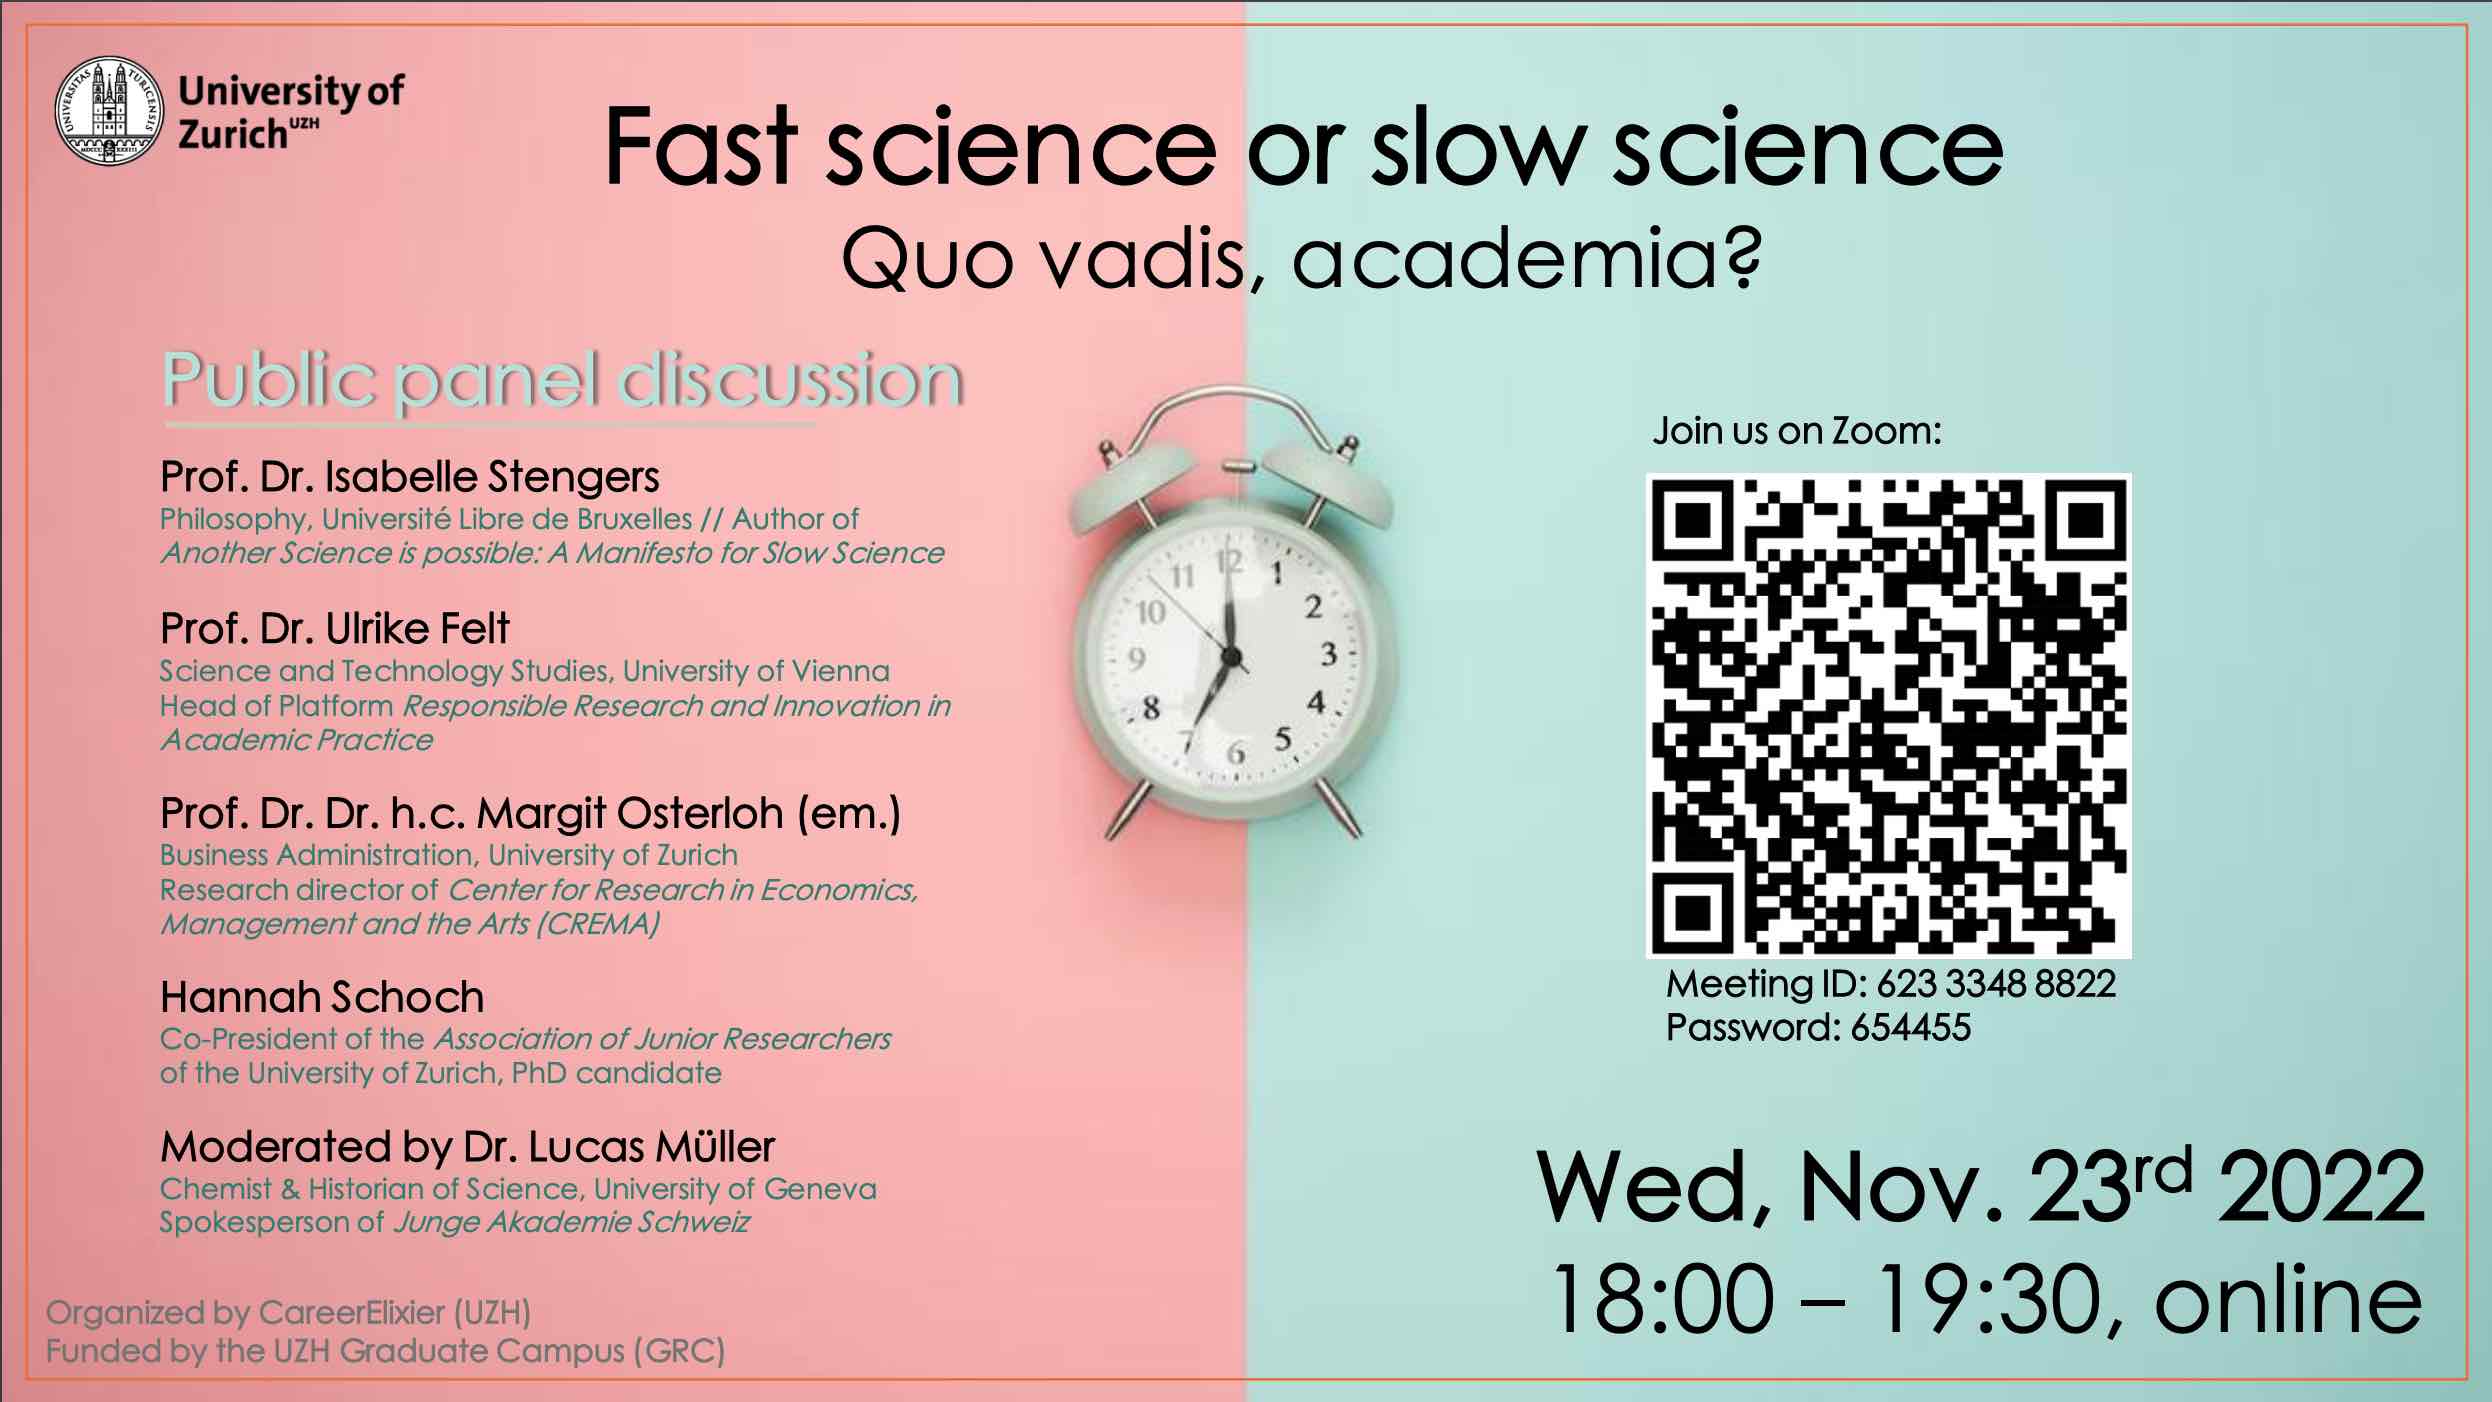 Flyer Einladung Panel discussion Fast science or slow science am 23.11.22, mit QR Code zur Zoom-Sitzung